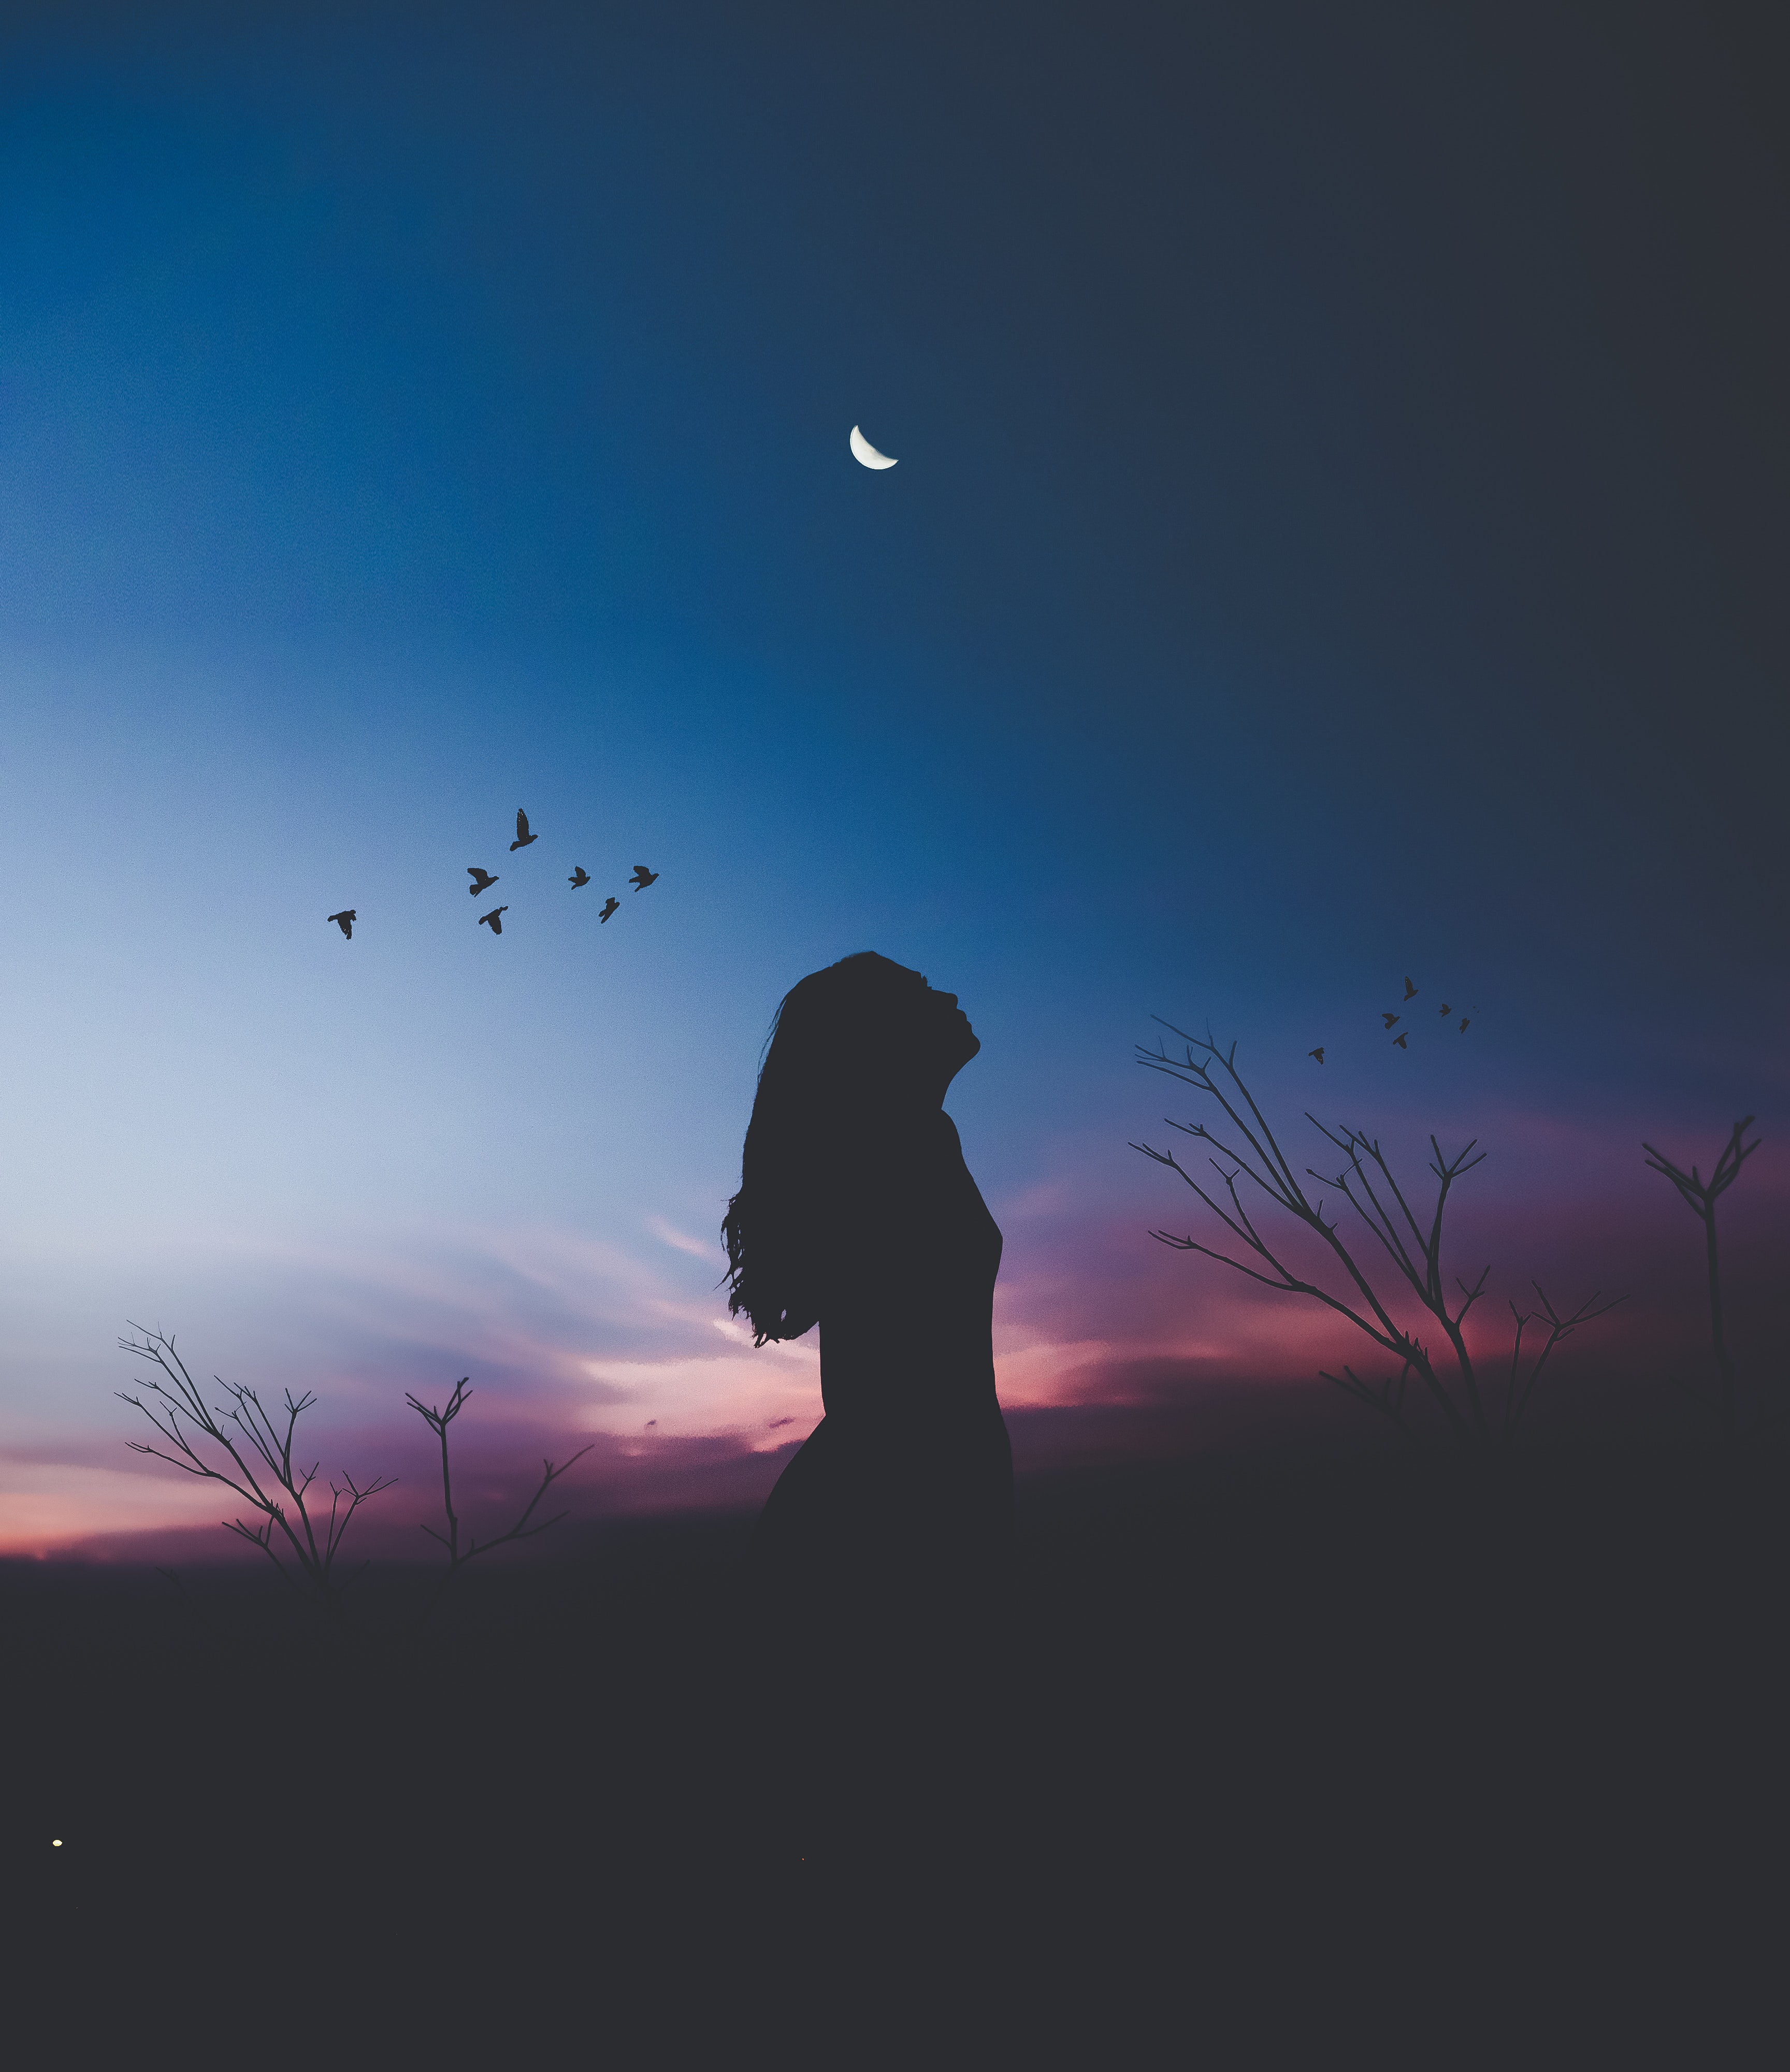 moon, loneliness, girl, dark, birds, night, silhouette, harmony High Definition image